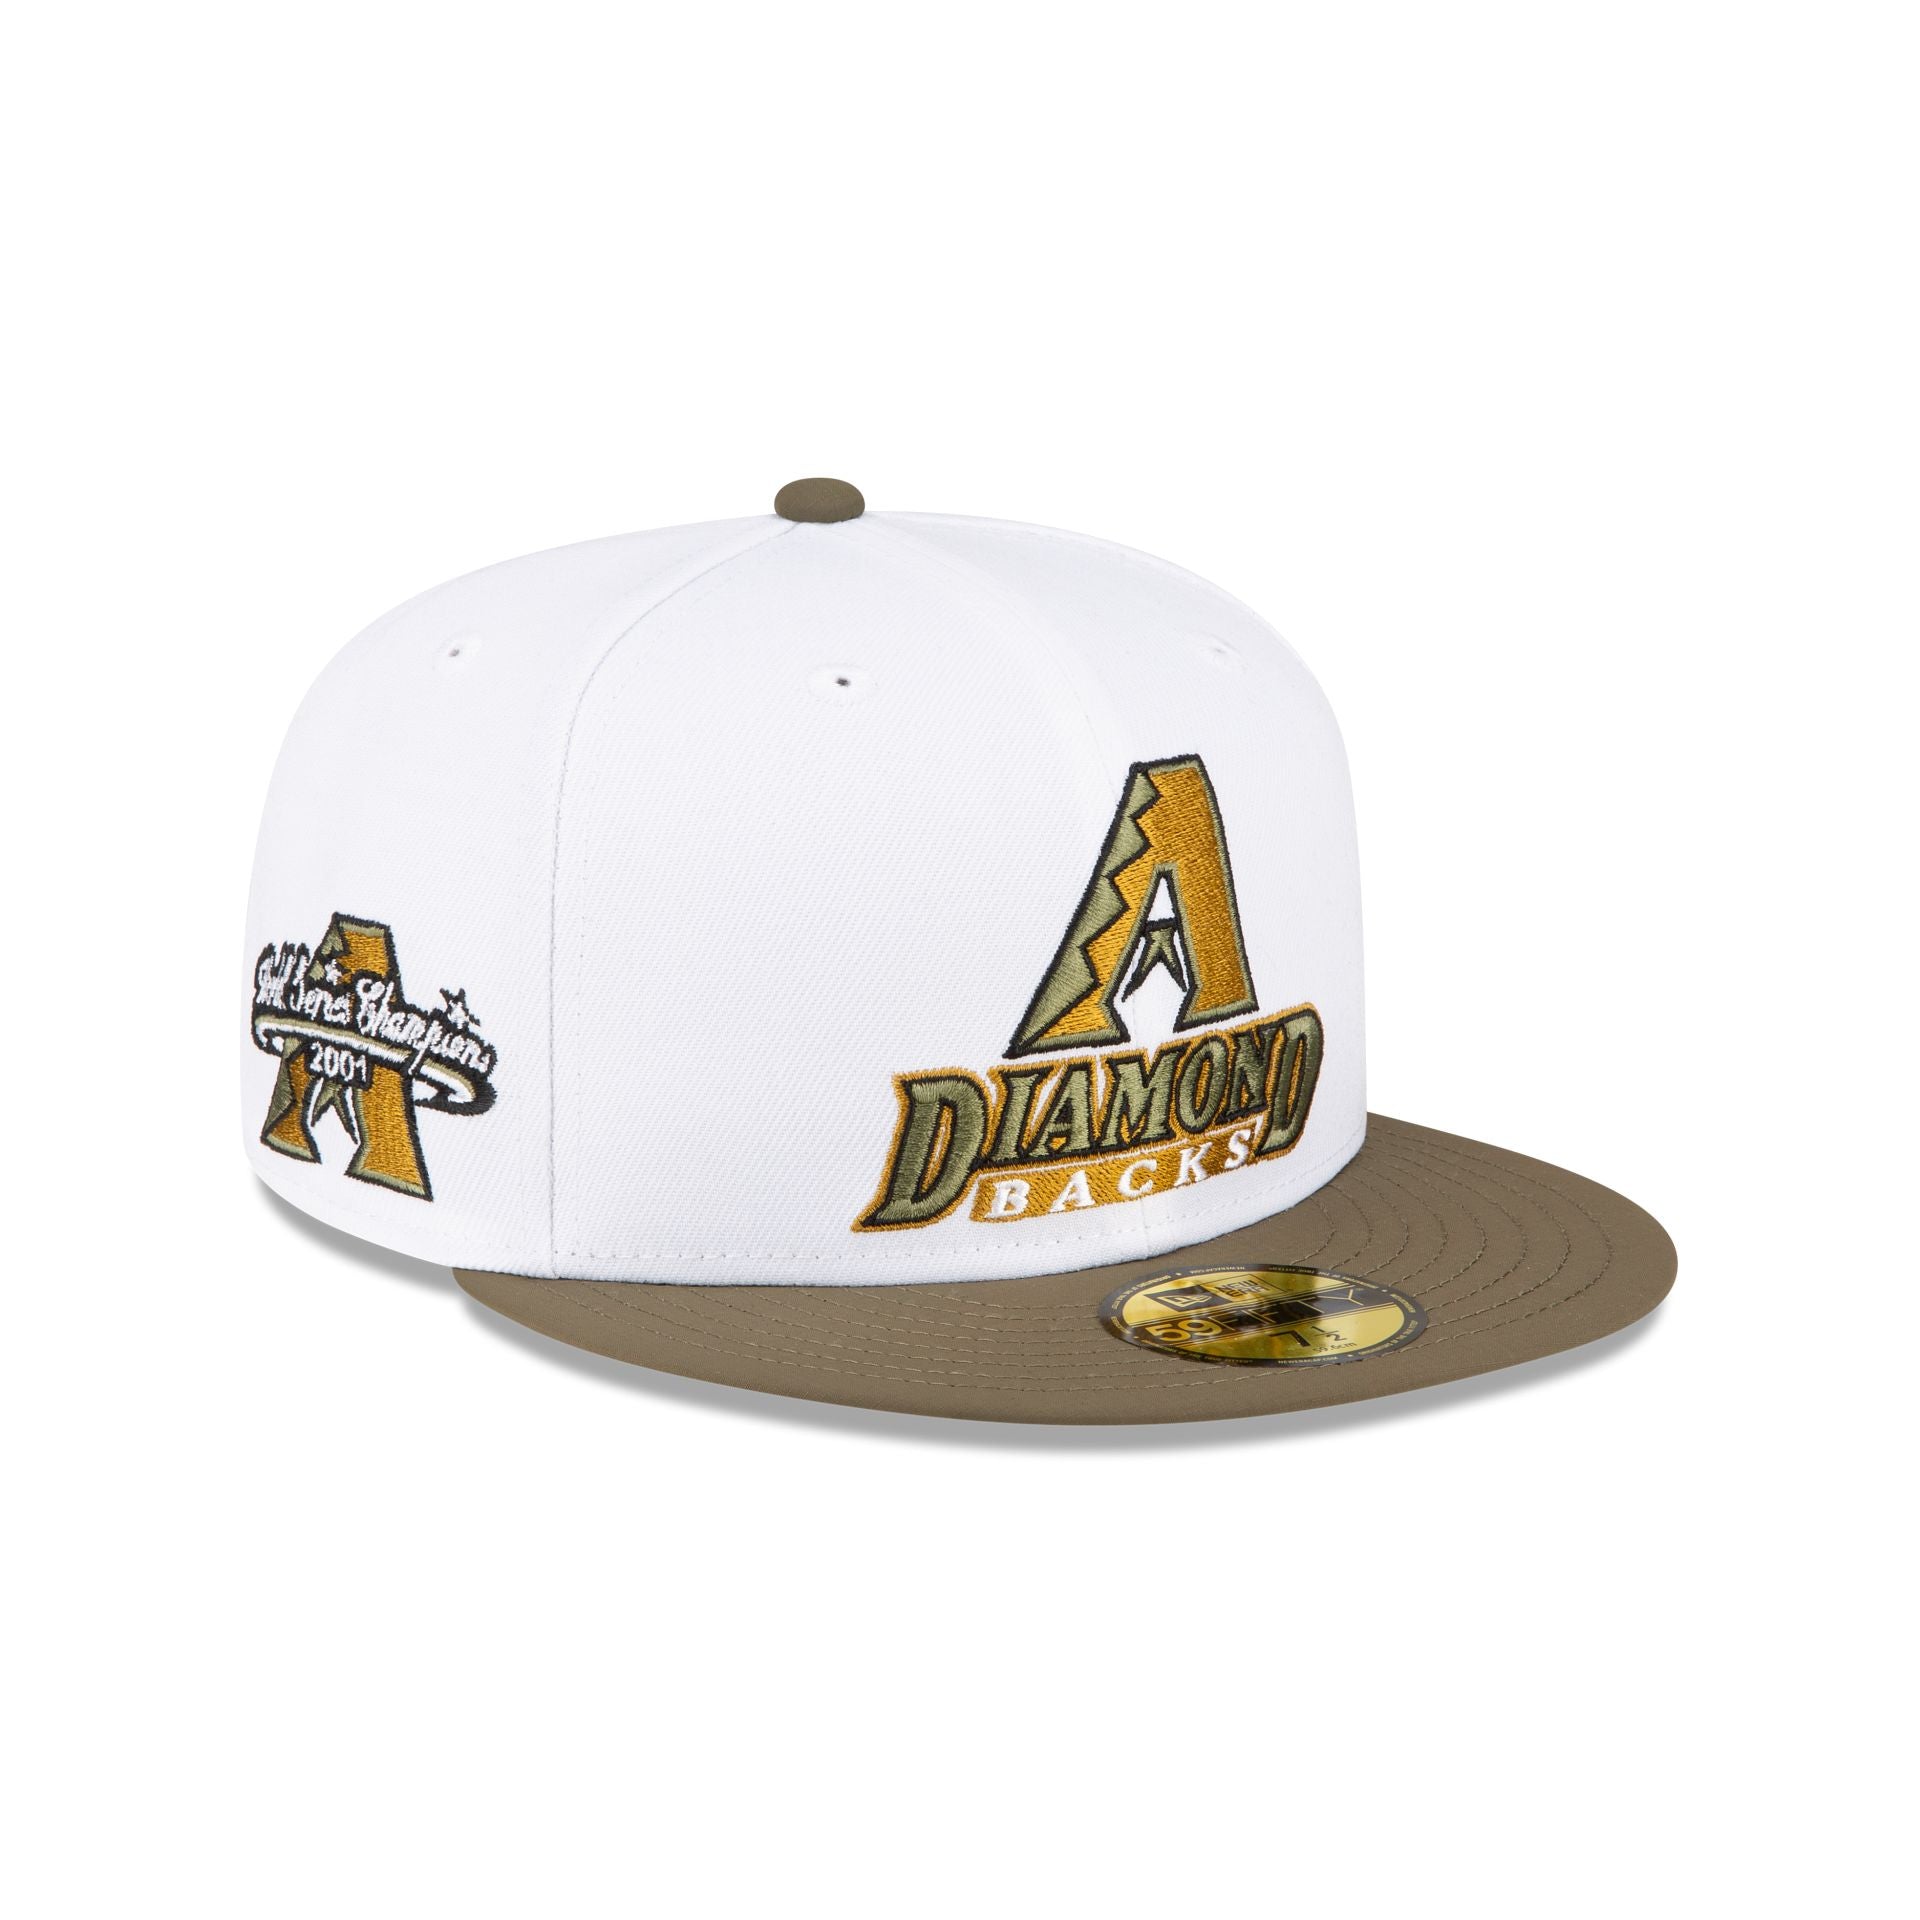 Diamondbacks Arizona New Cap Caps & Hats – Era